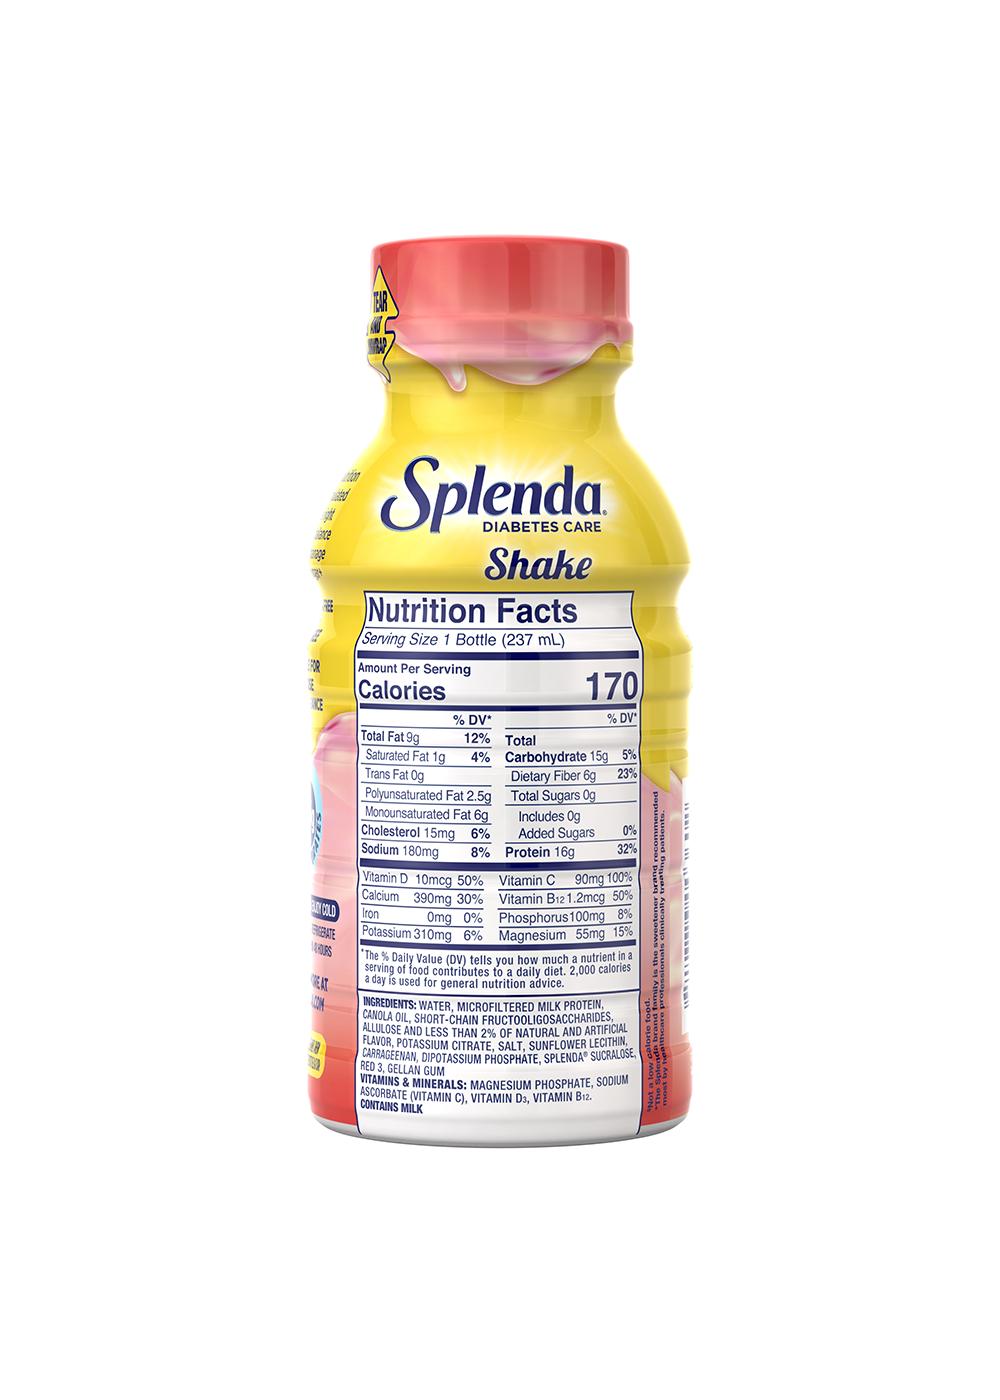 Splenda Diabetes Care Diabetes Care Strawberry Banana Shake 8 oz Bottles; image 5 of 5